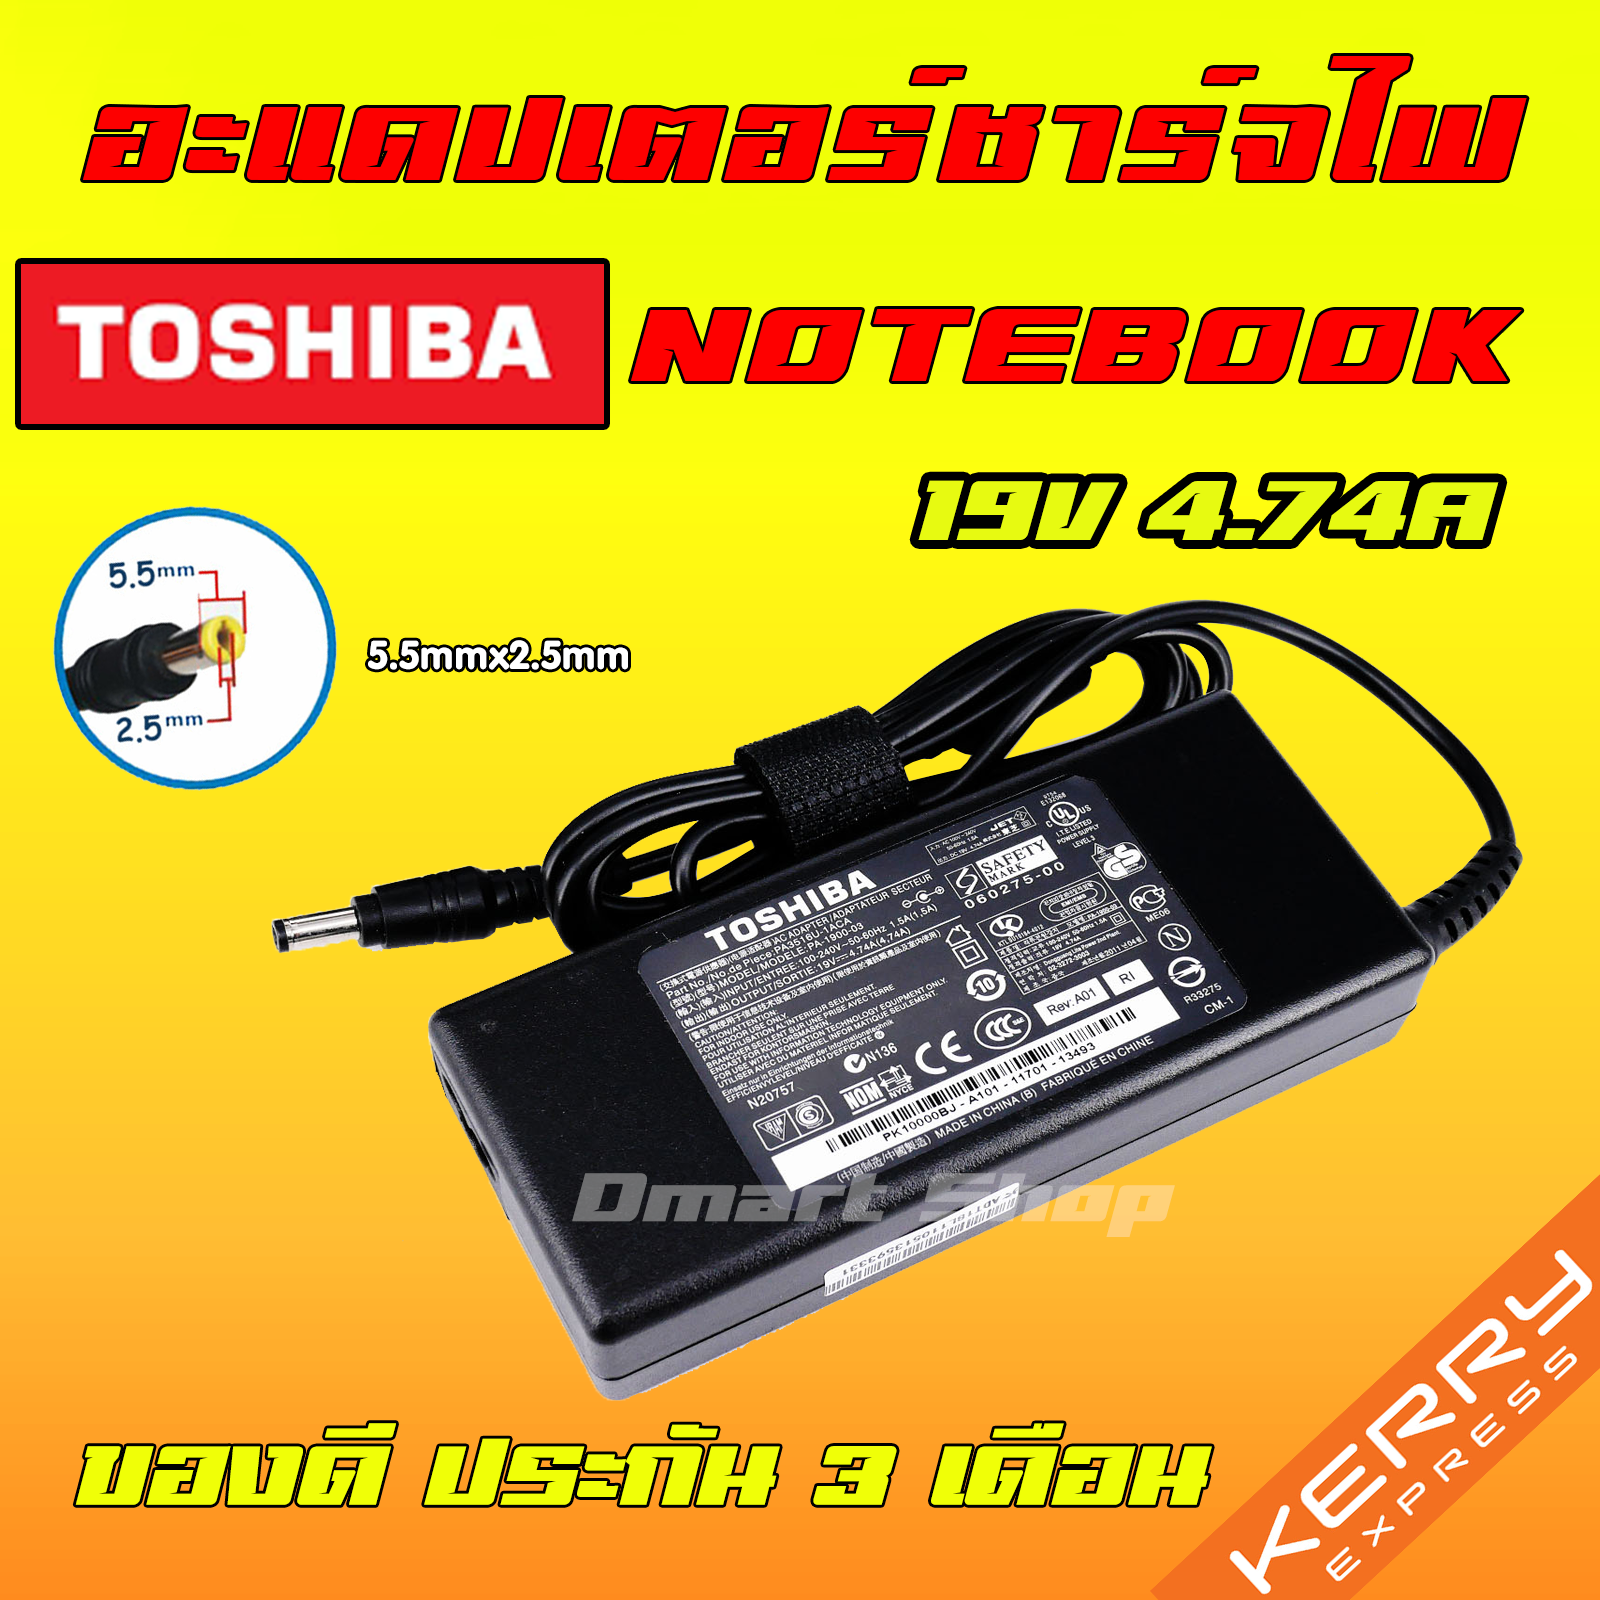 ⚡️ Toshiba ไฟ 90W 19V 4.74A หัวขนาด 5.5 * 2.5 mm อะแดปเตอร์ ชาร์จไฟ โน๊ตบุ๊ค โตชิบ้า Notebook Adapter Charger